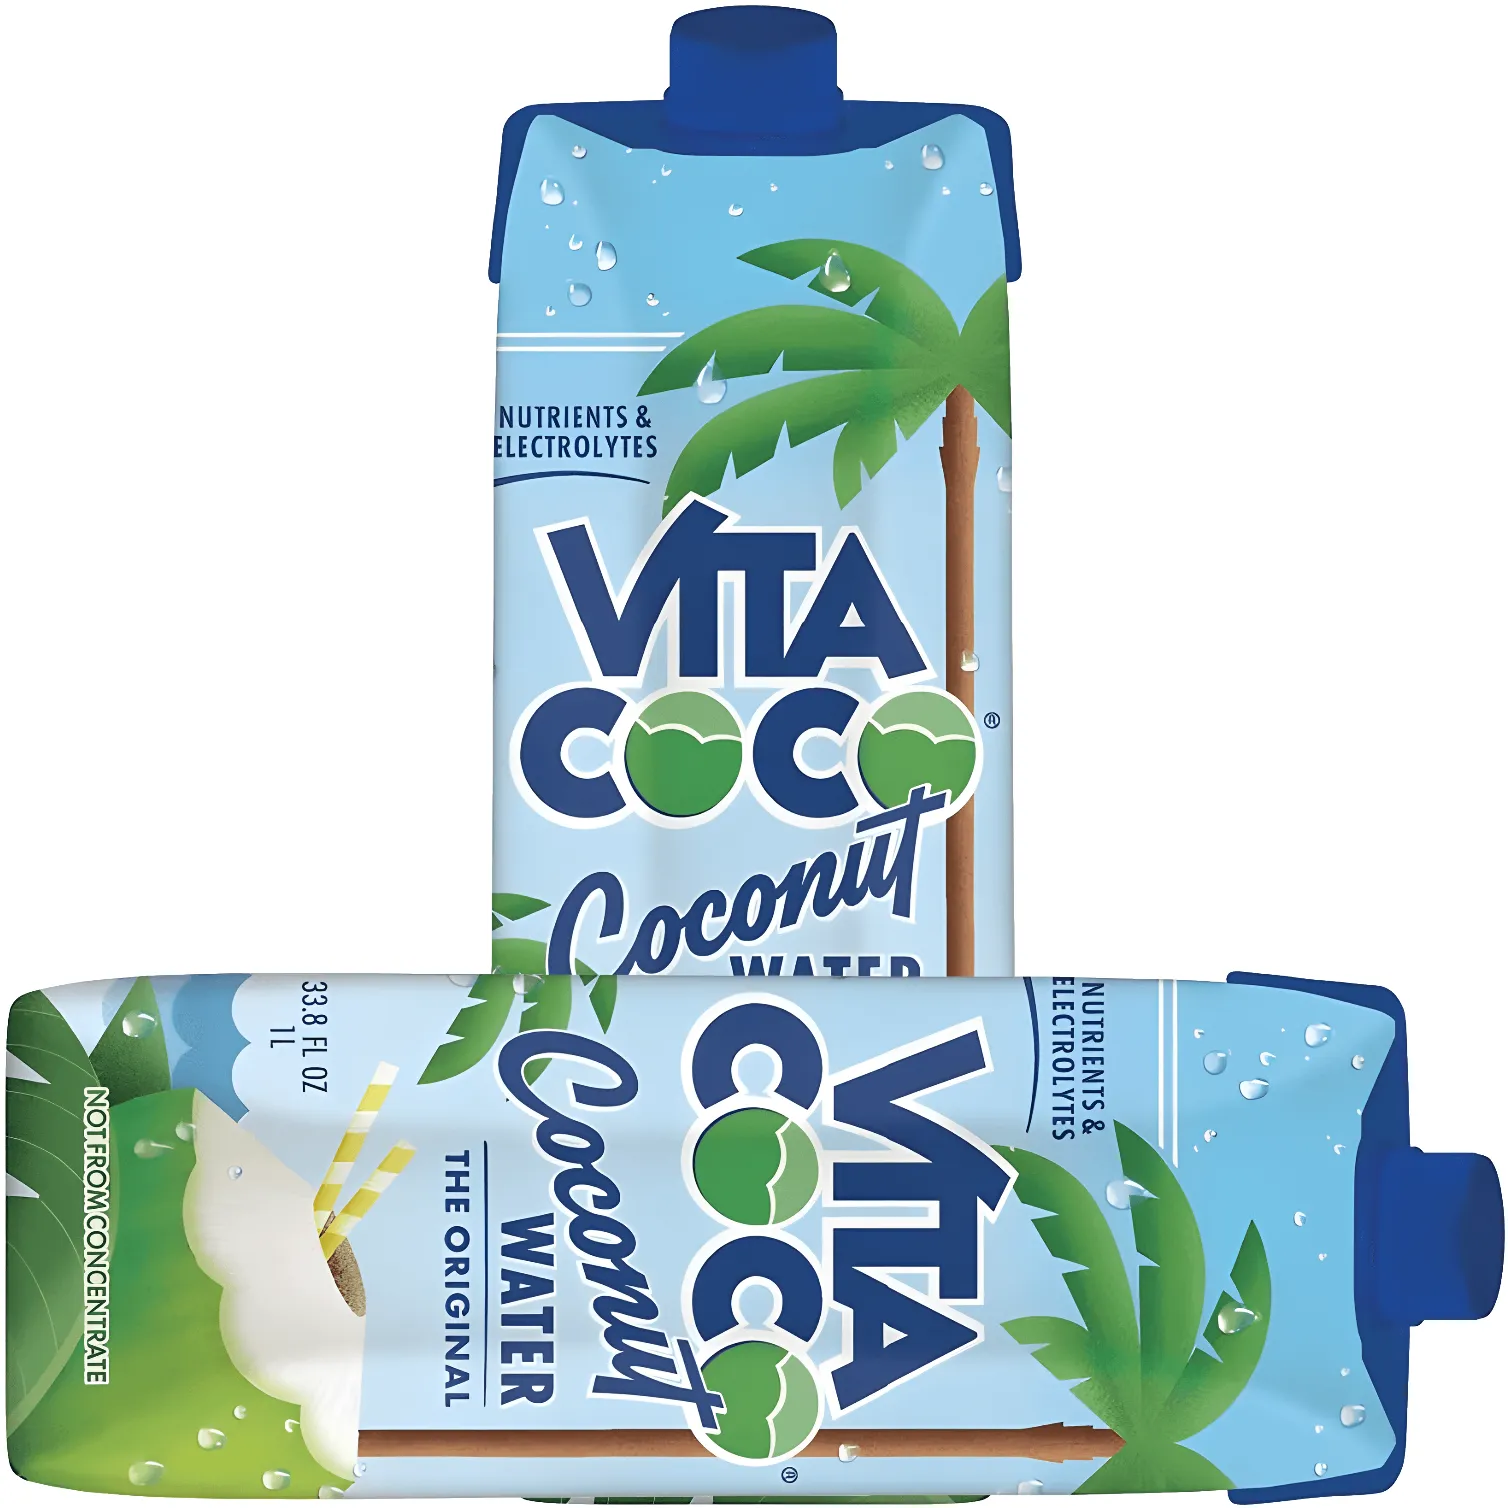 Free Vita Coco Coconut Water After Rebate